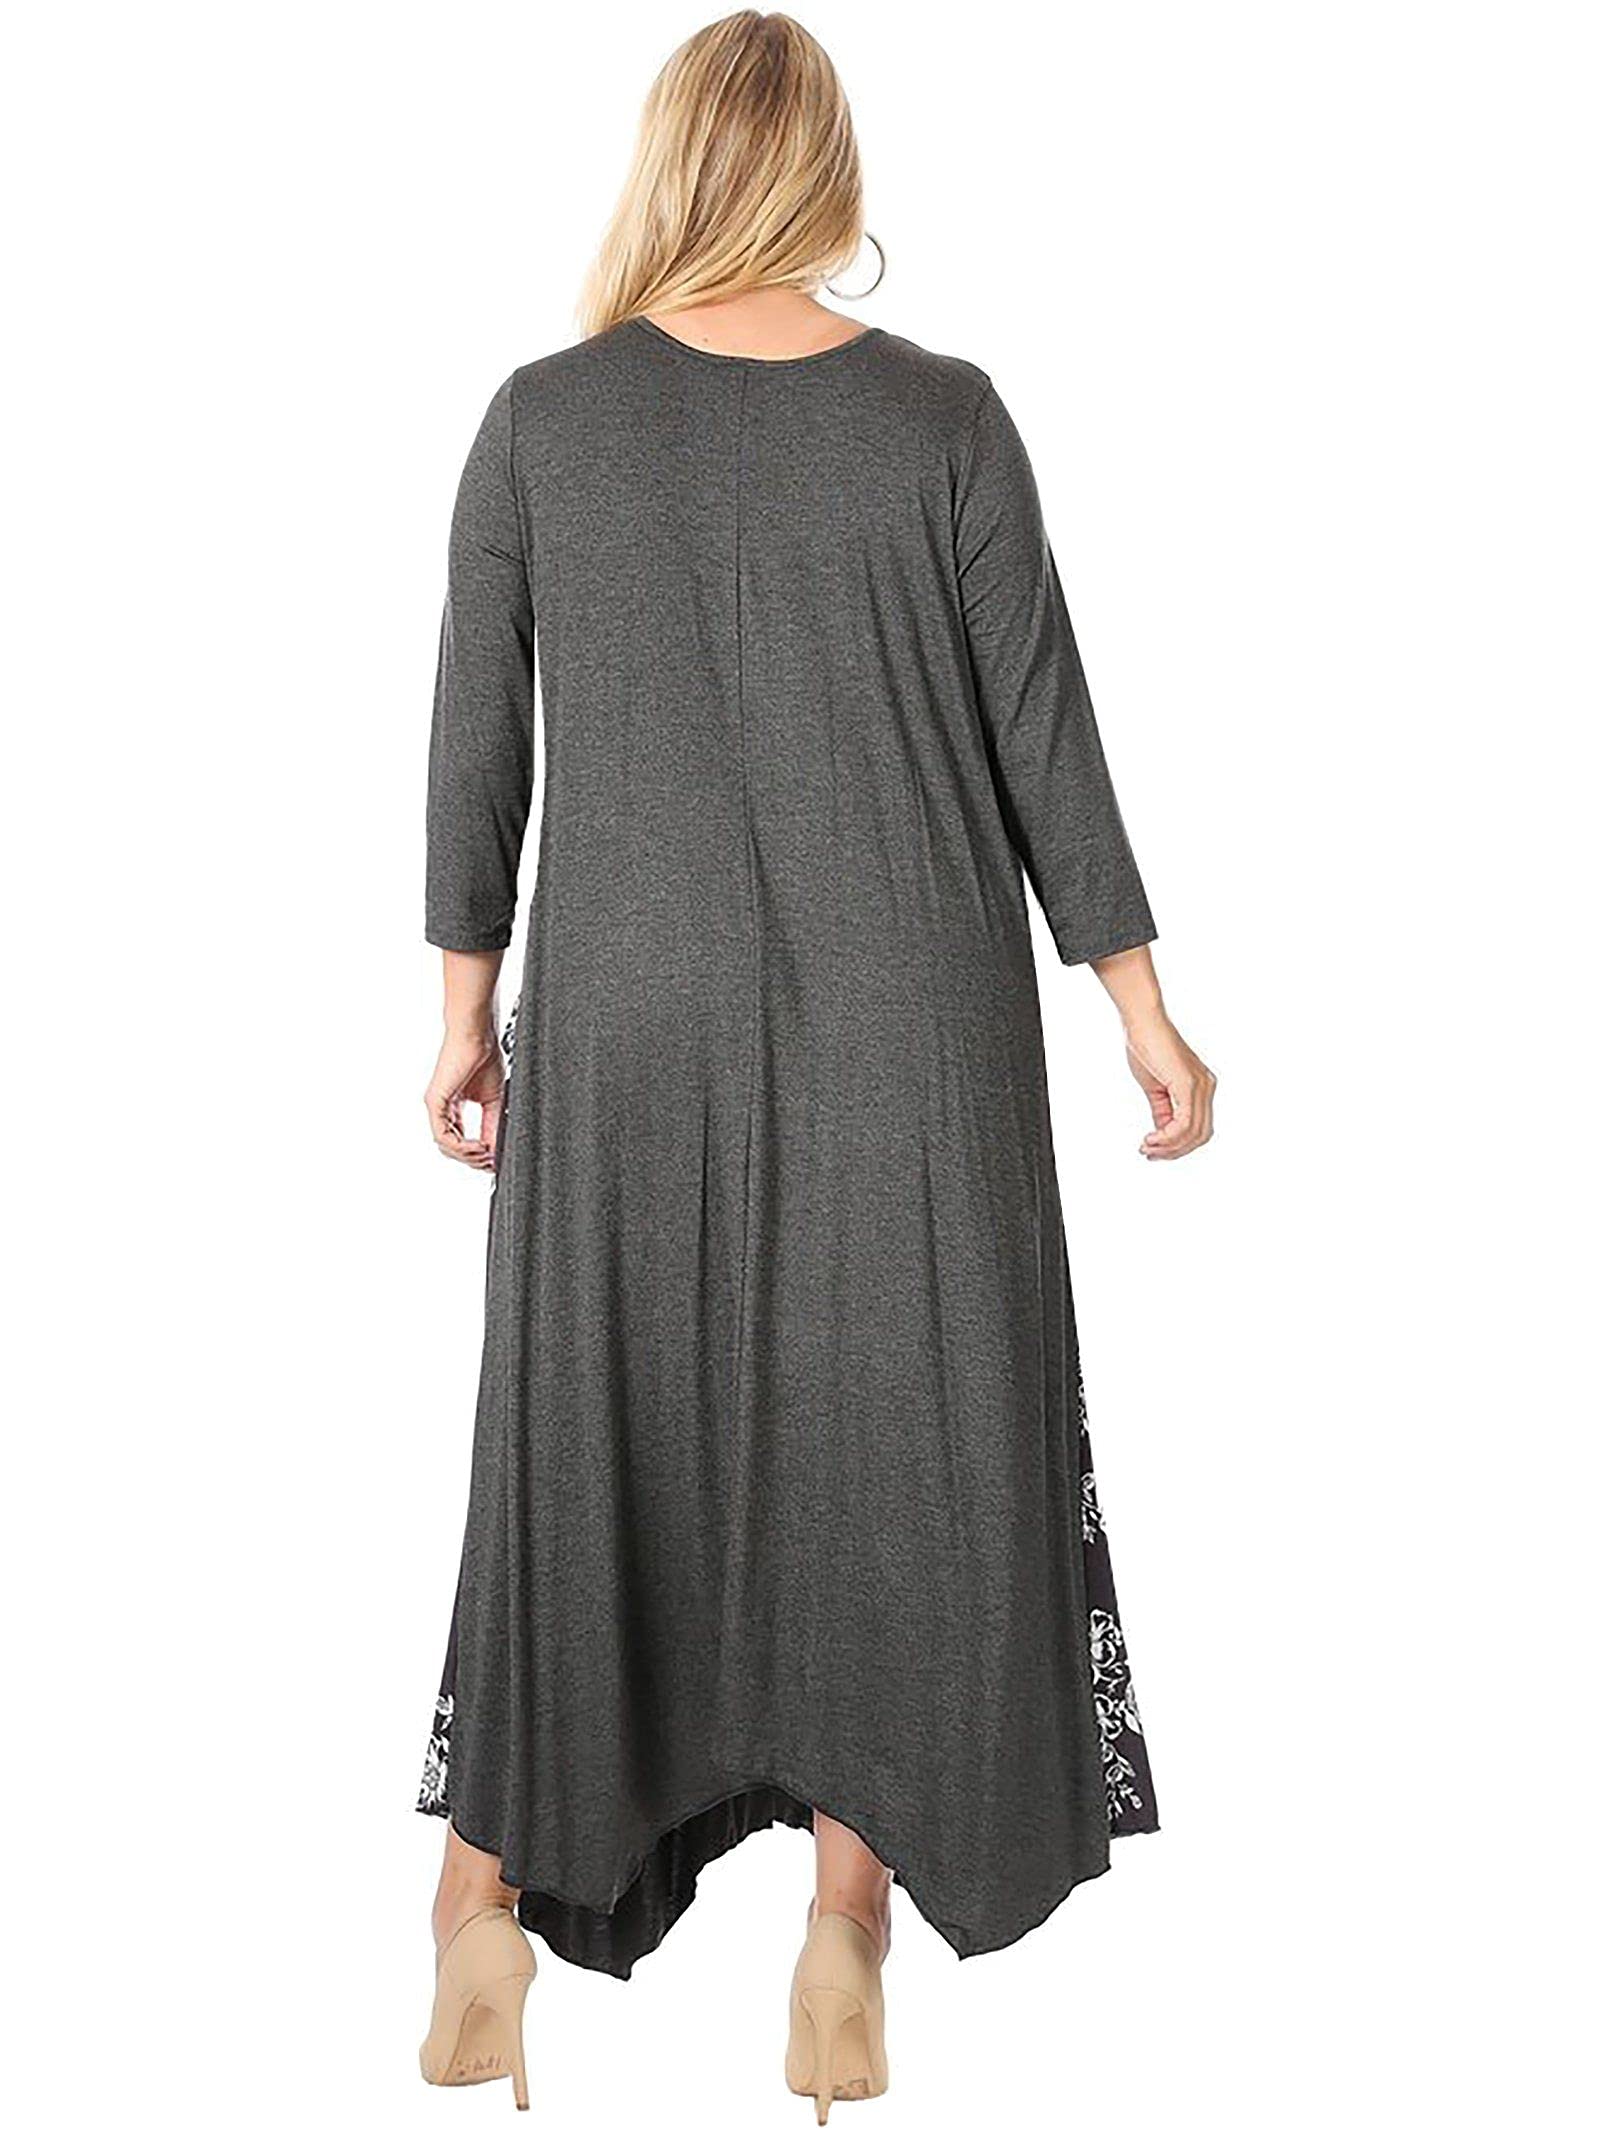 Funfash Women Plus Size Gray White Pocket Slimming Long Maxi Dress Made in USA